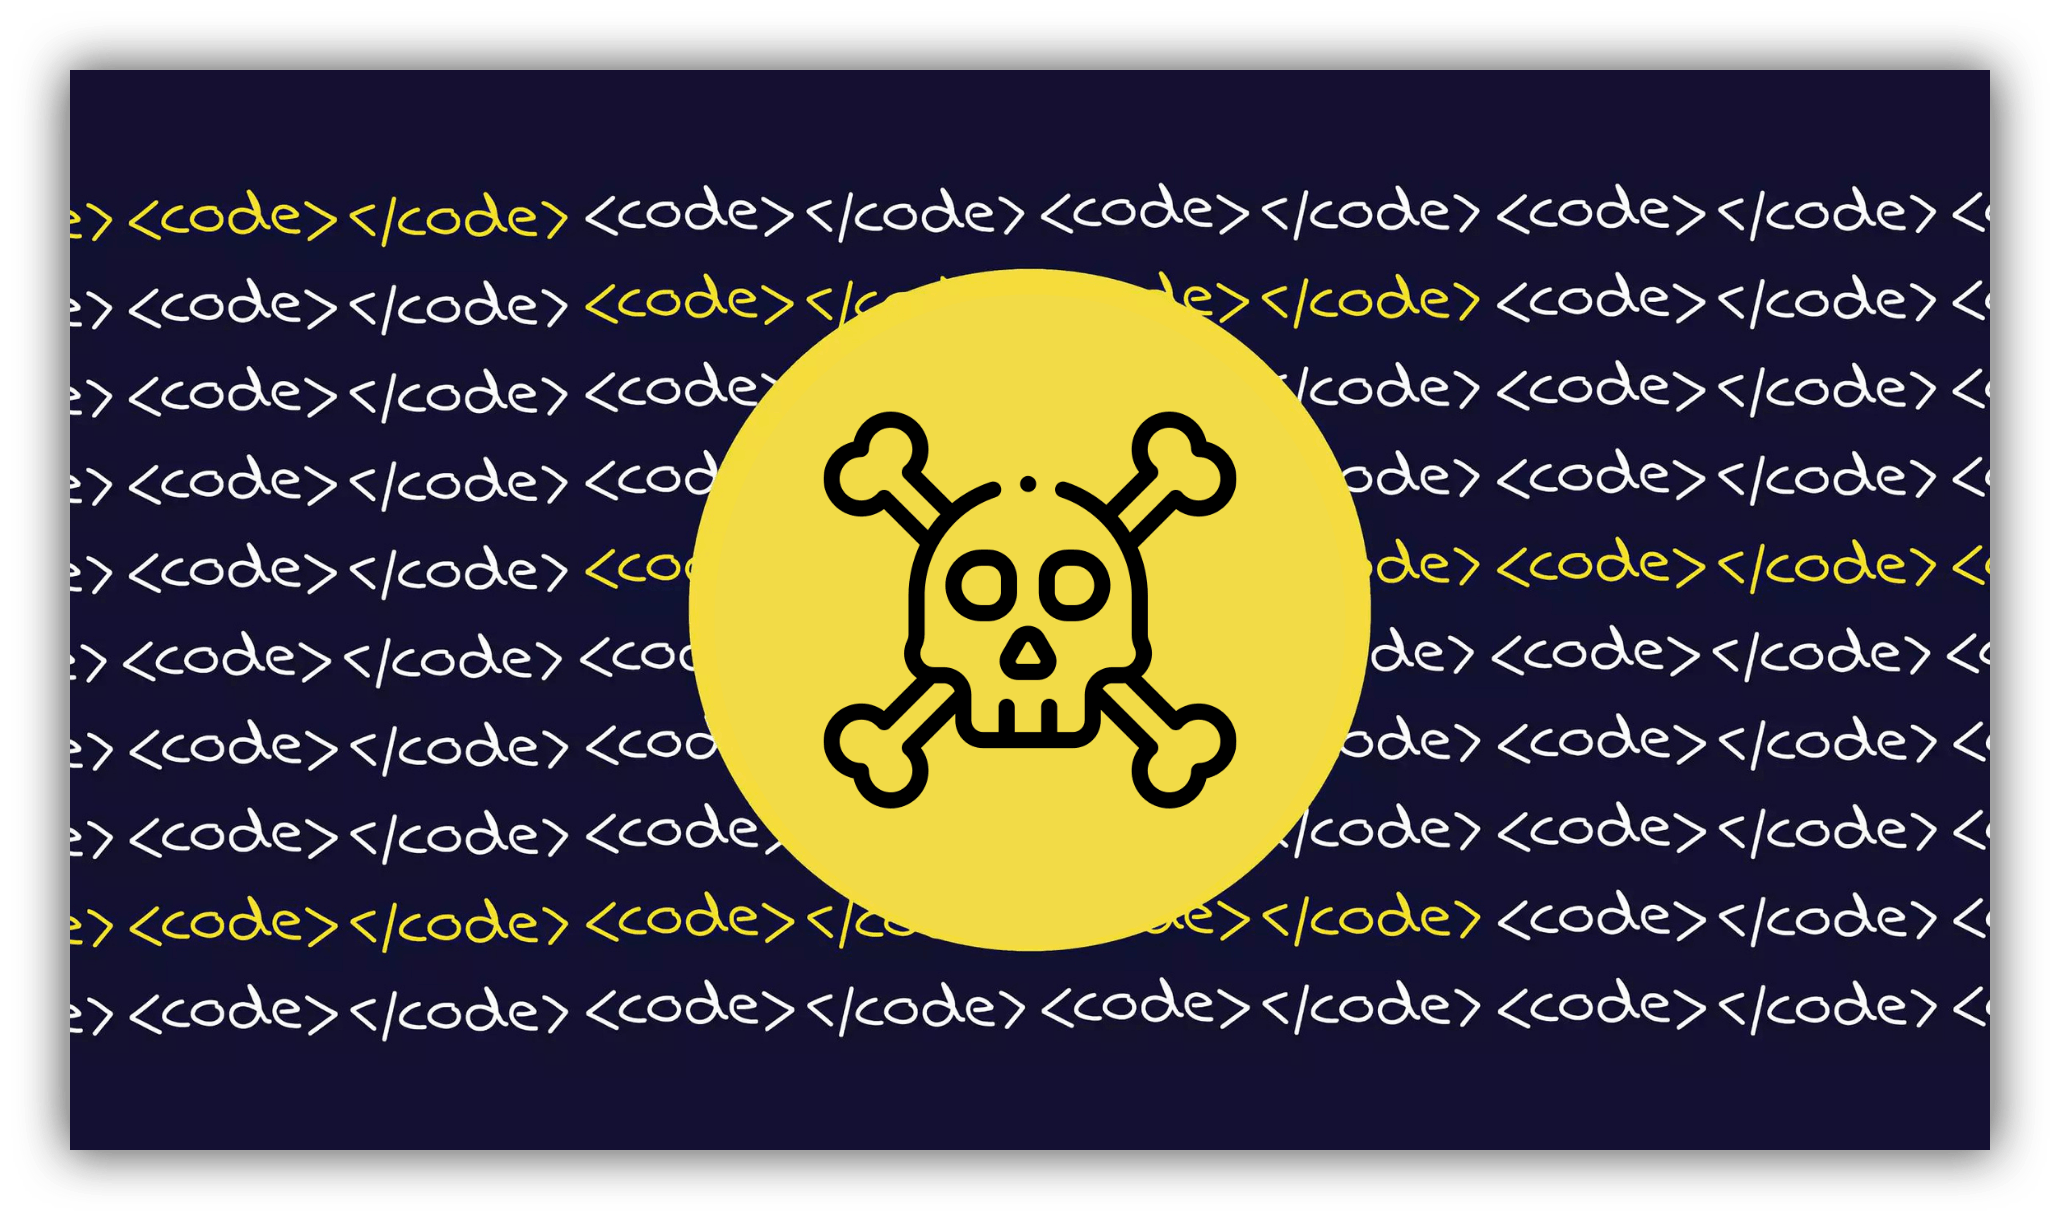 no-code means no code